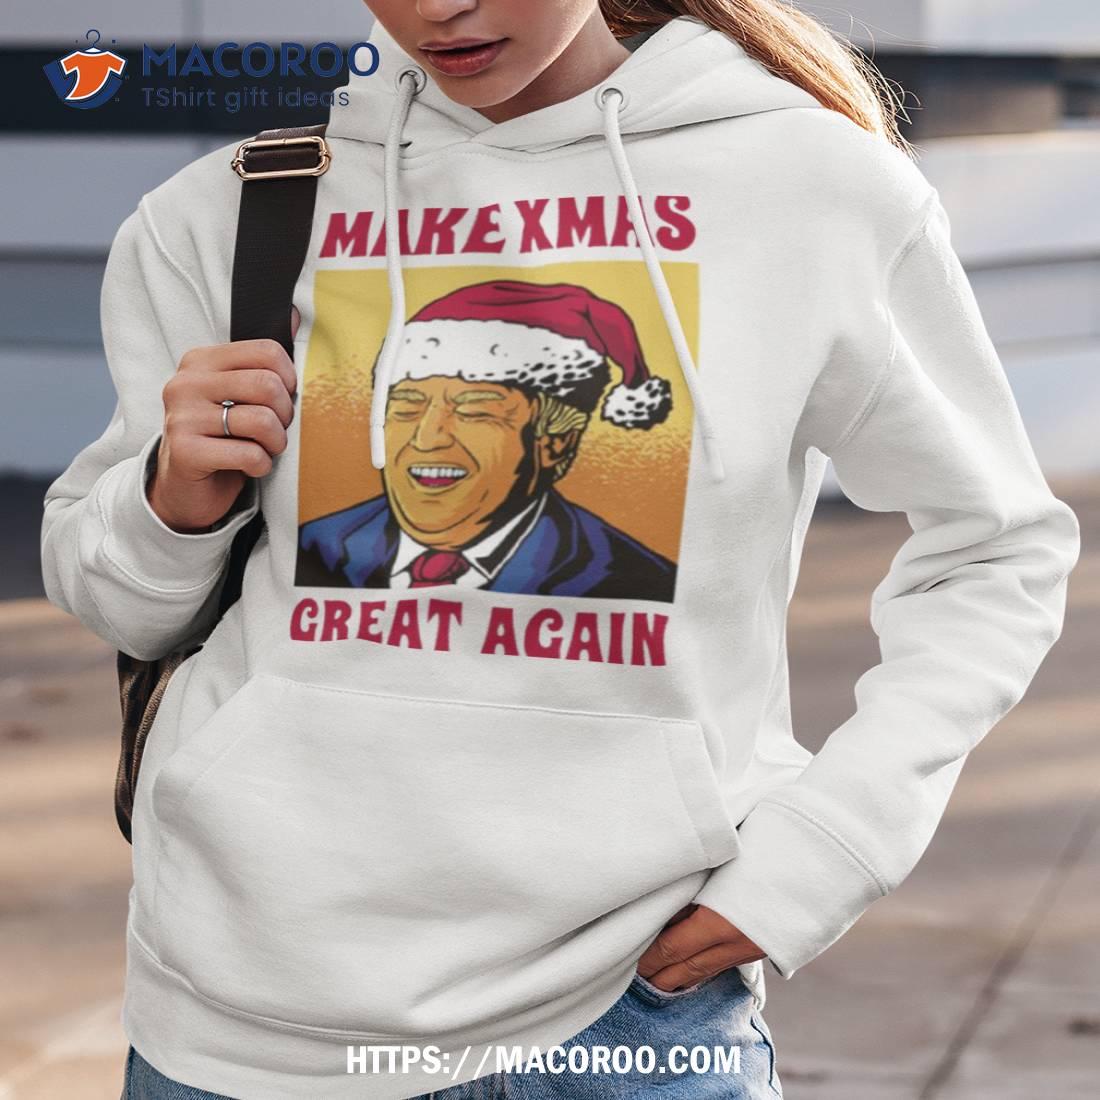 Make Christmas Great Again Trump Xmas Gifts' Unisex Crewneck Sweatshirt